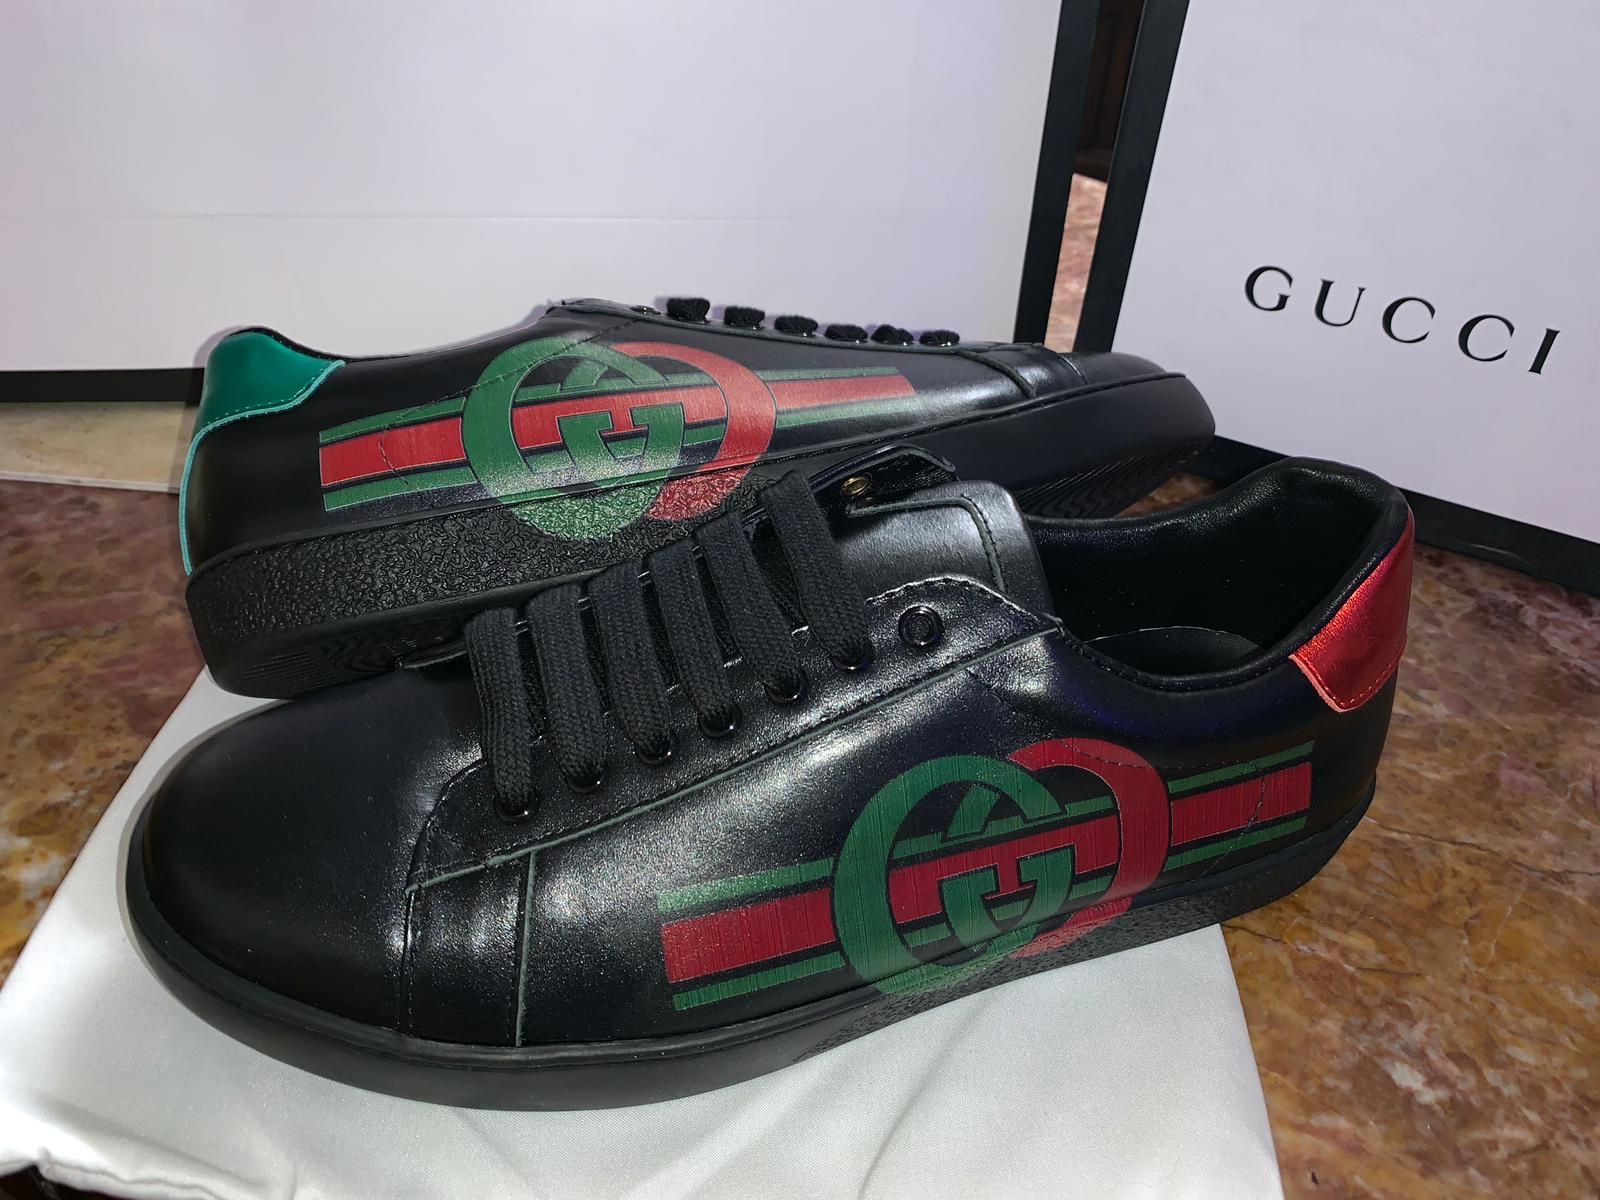 Gg ace interlocking g black sneakers